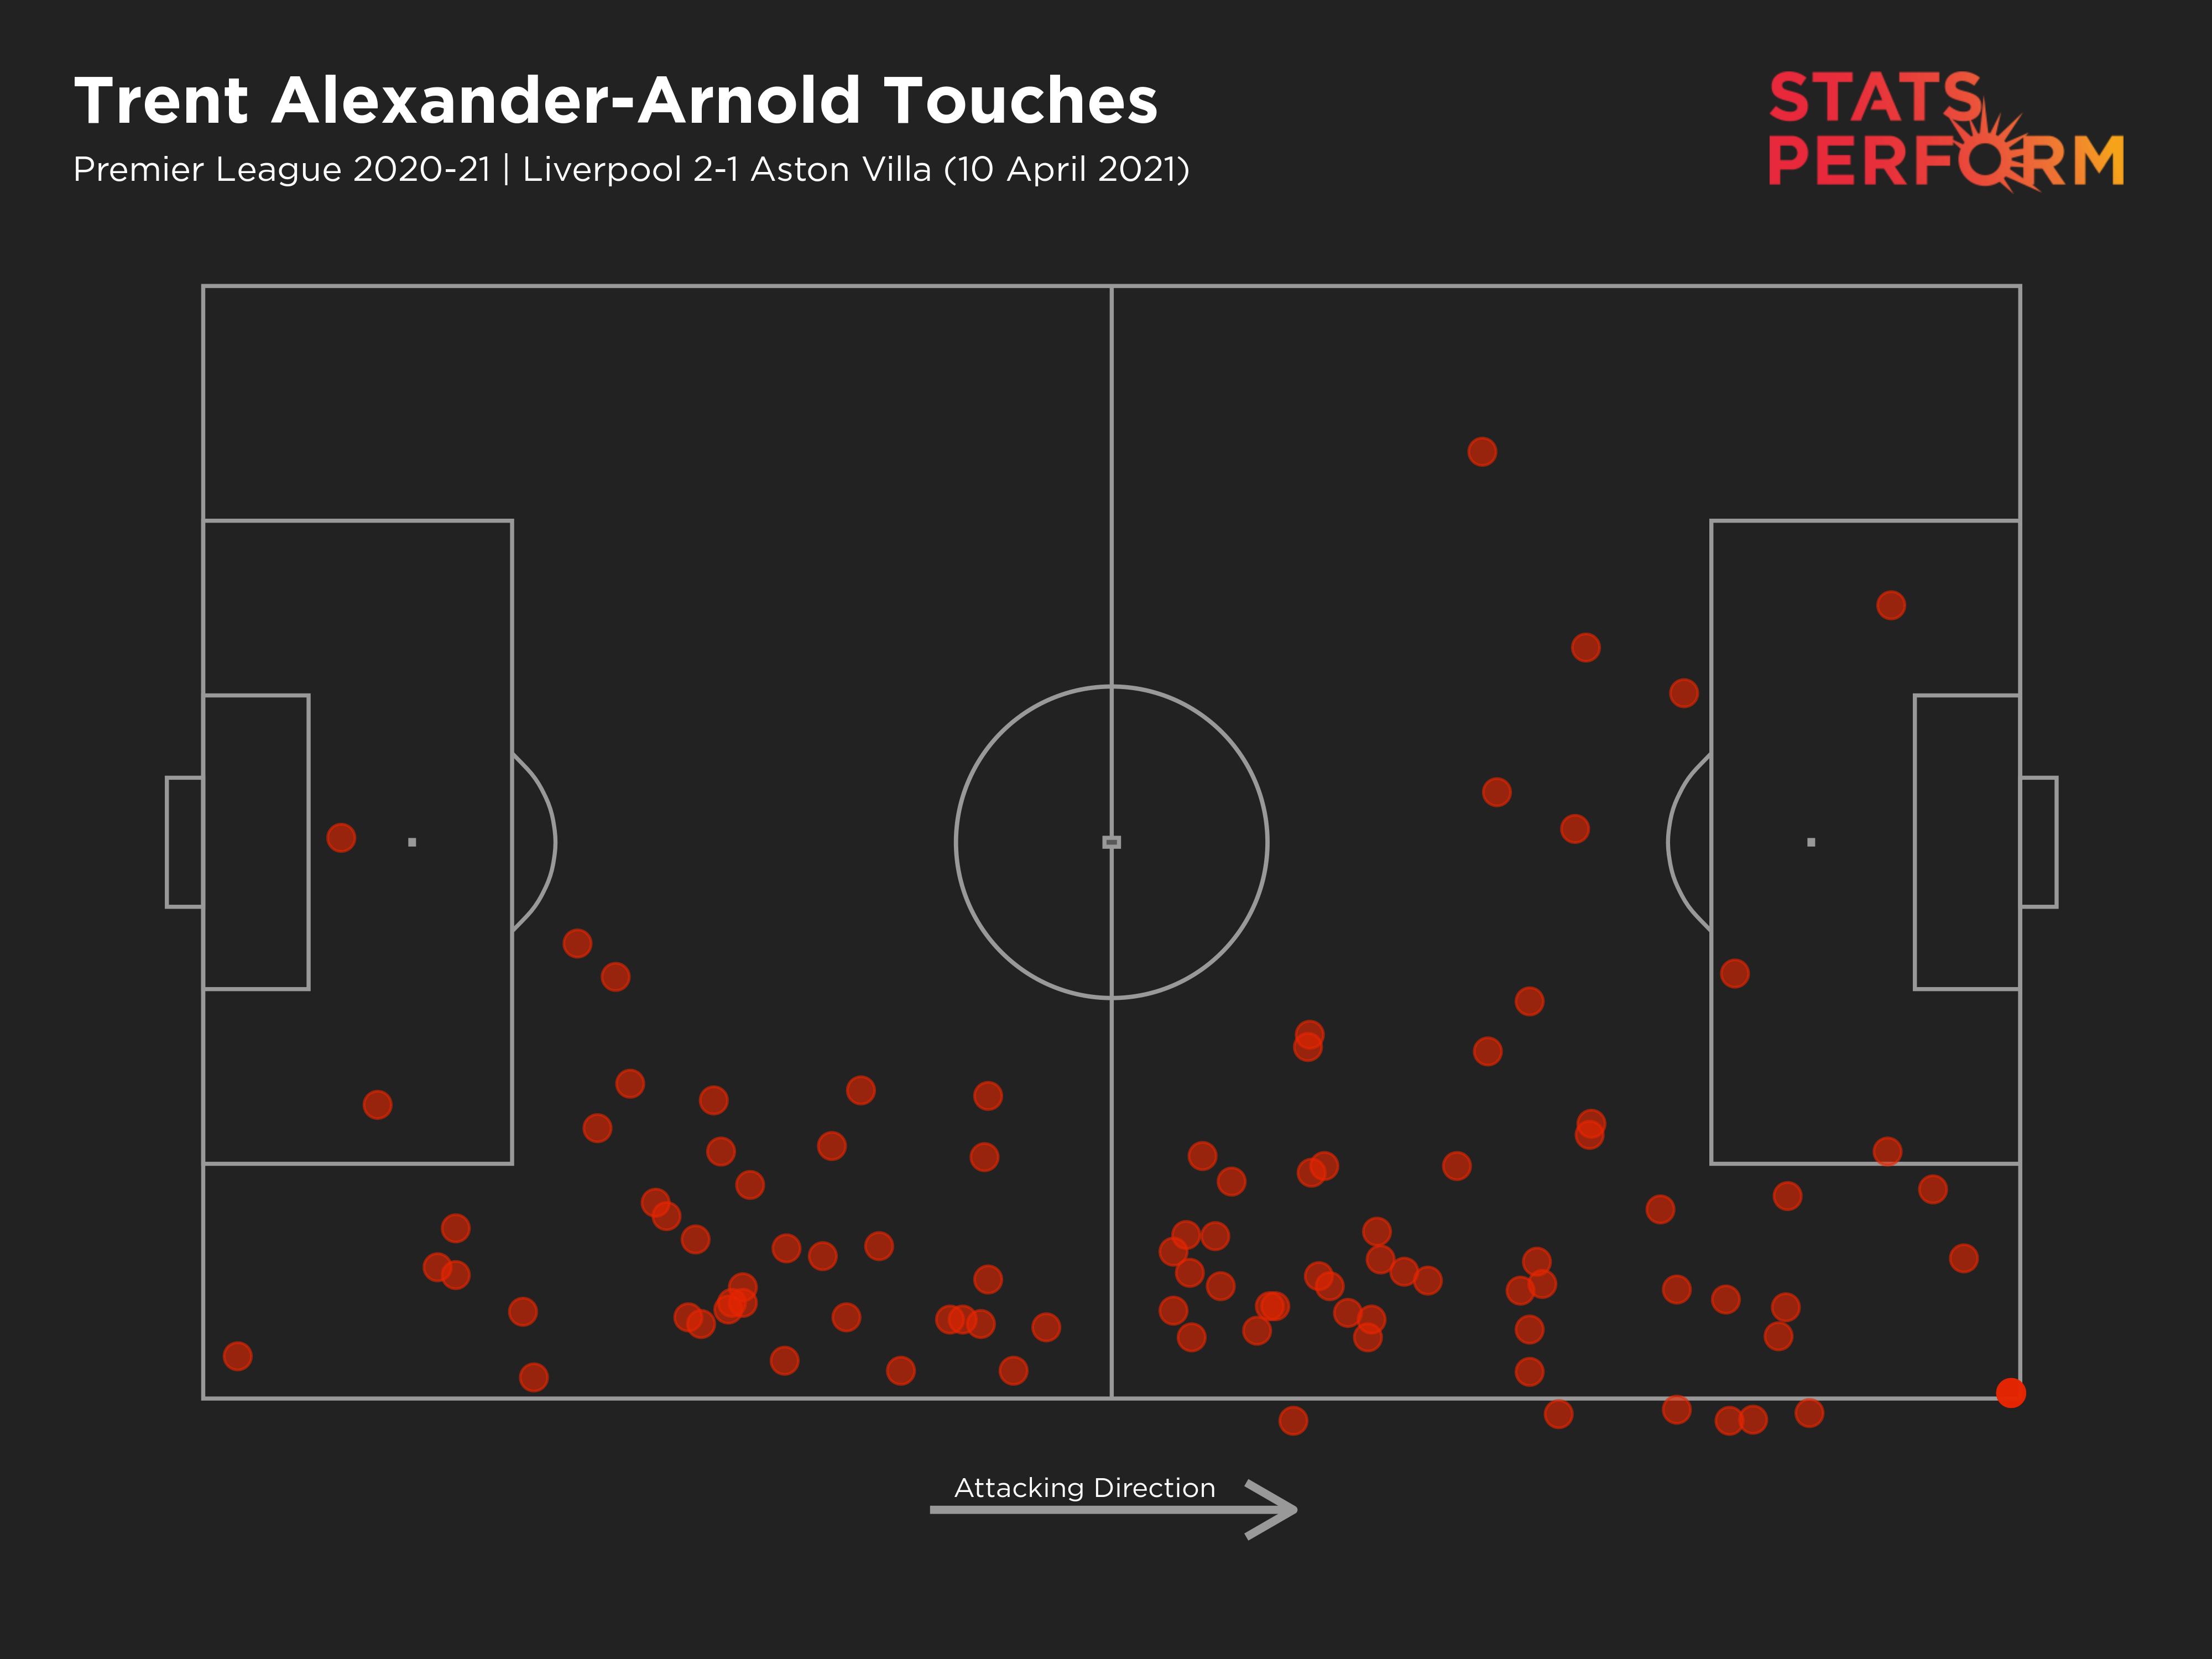 Trent Alexander-Arnold's 100 touches against Villa